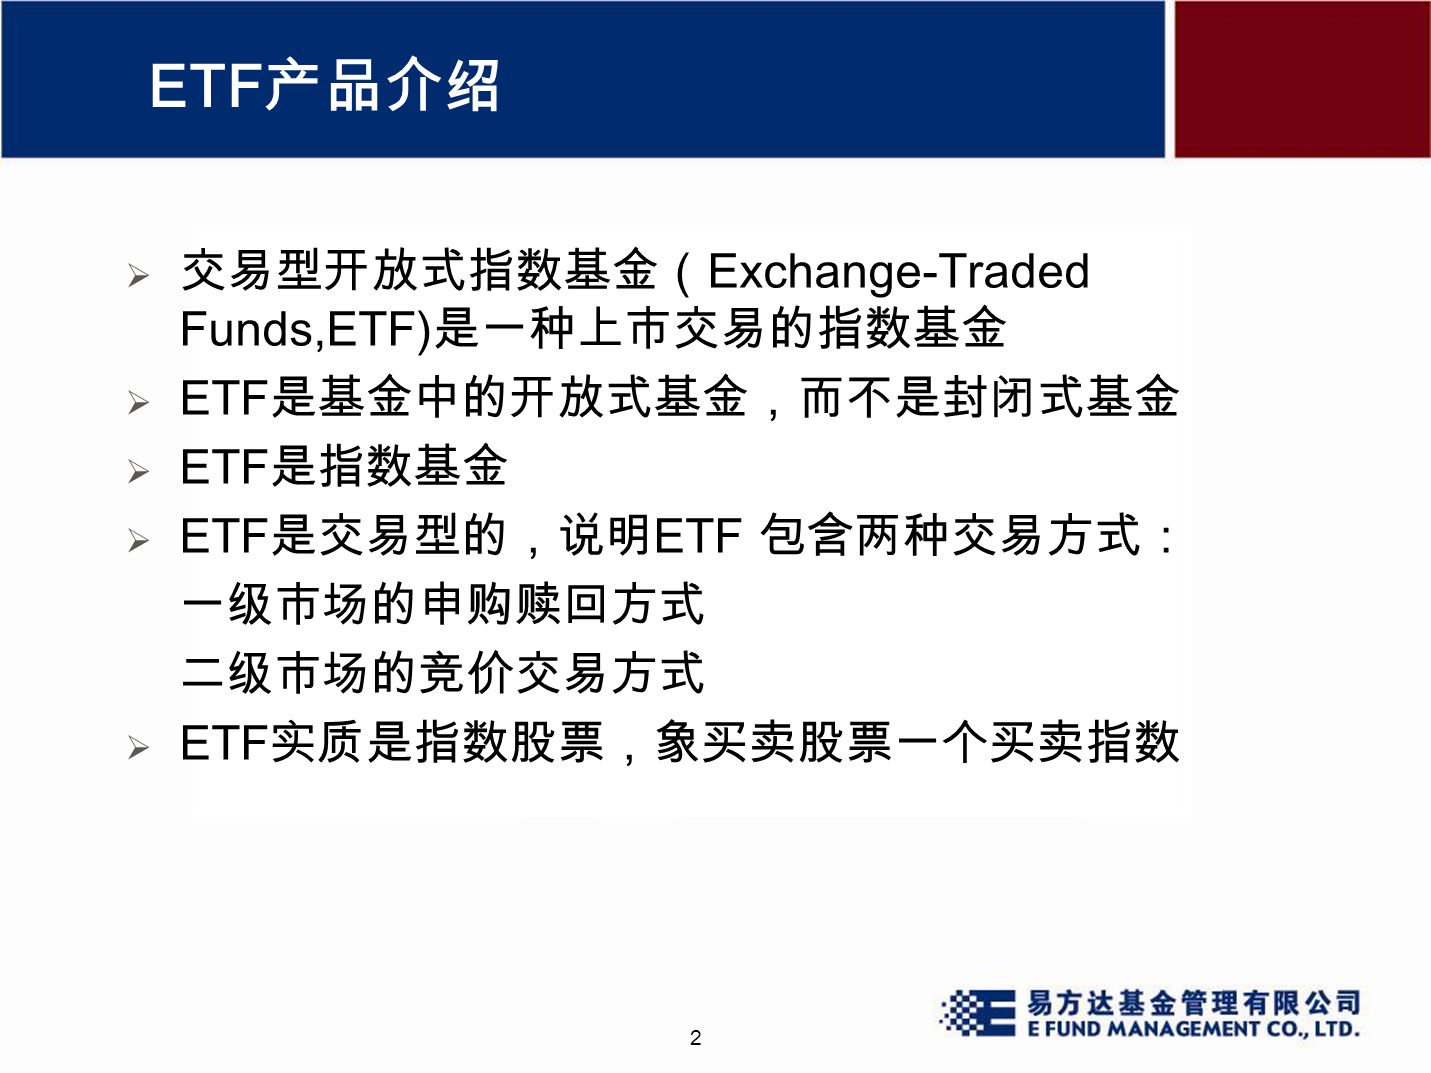 2 ETF 产品介绍  交易型开放式指数基金（ Exchange-Traded Funds,ETF) 是一种上市交易的指数基金  ETF 是基金中的开放式基金，而不是封闭式基金  ETF 是指数基金  ETF 是交易型的，说明 ETF 包含两种交易方式： 一级市场的申购赎回方式 二级市场的竞价交易方式  ETF 实质是指数股票，象买卖股票一个买卖指数